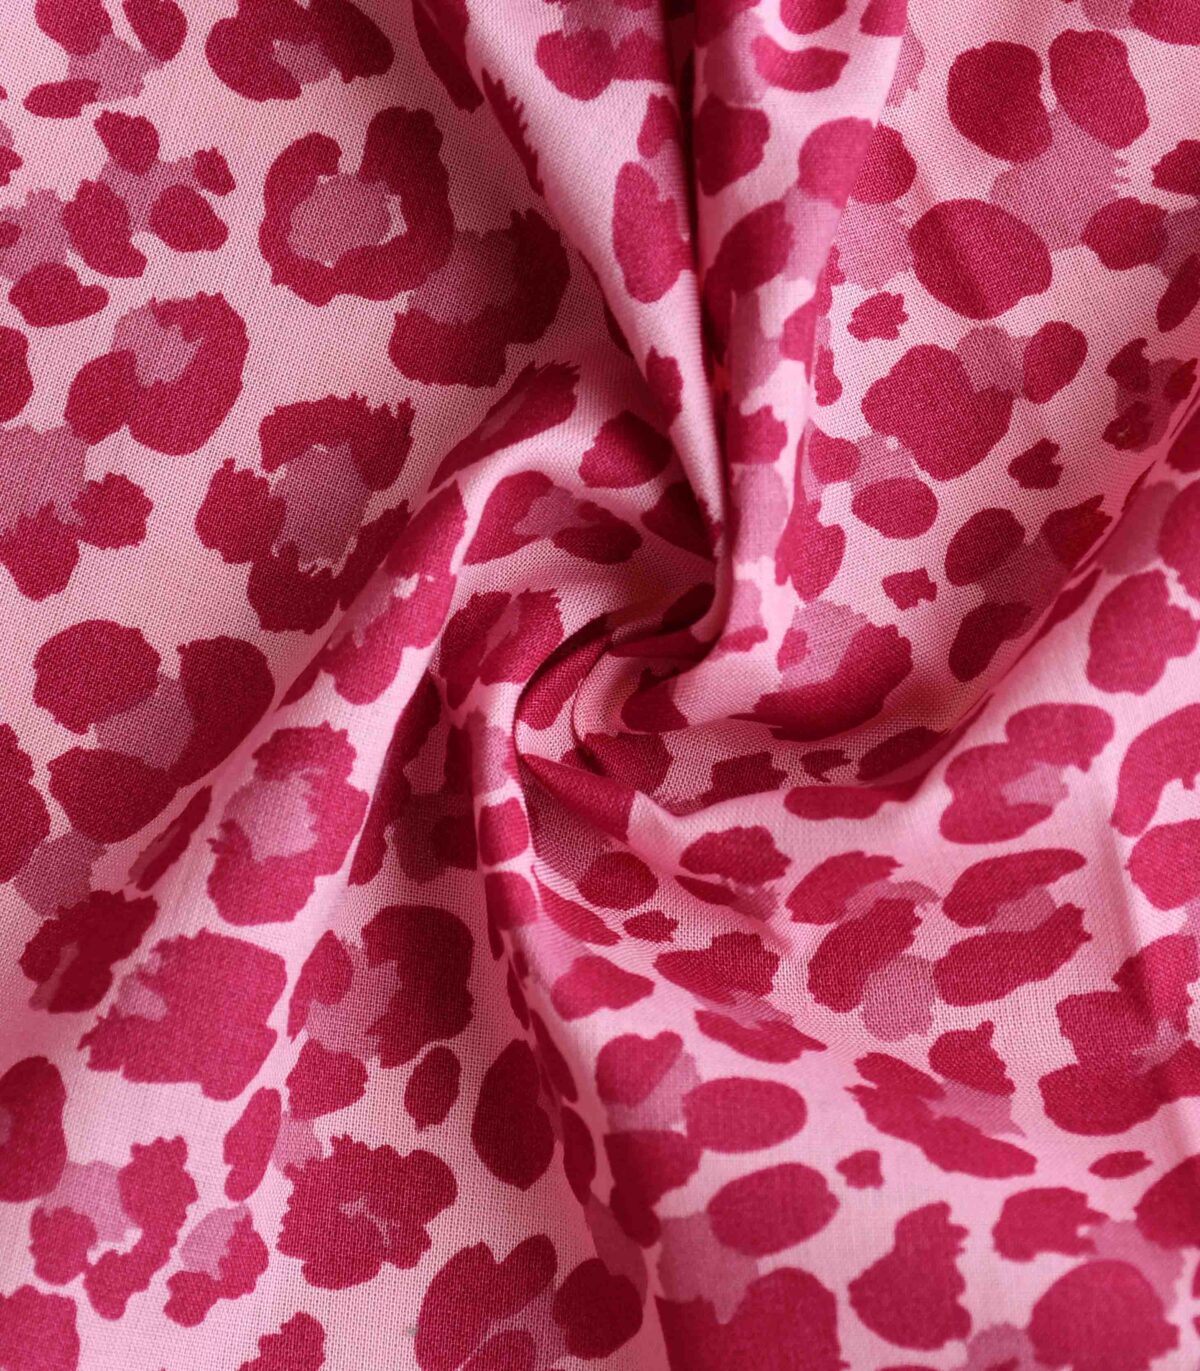 Cotton Pink Color Animal Print Woven Fabric